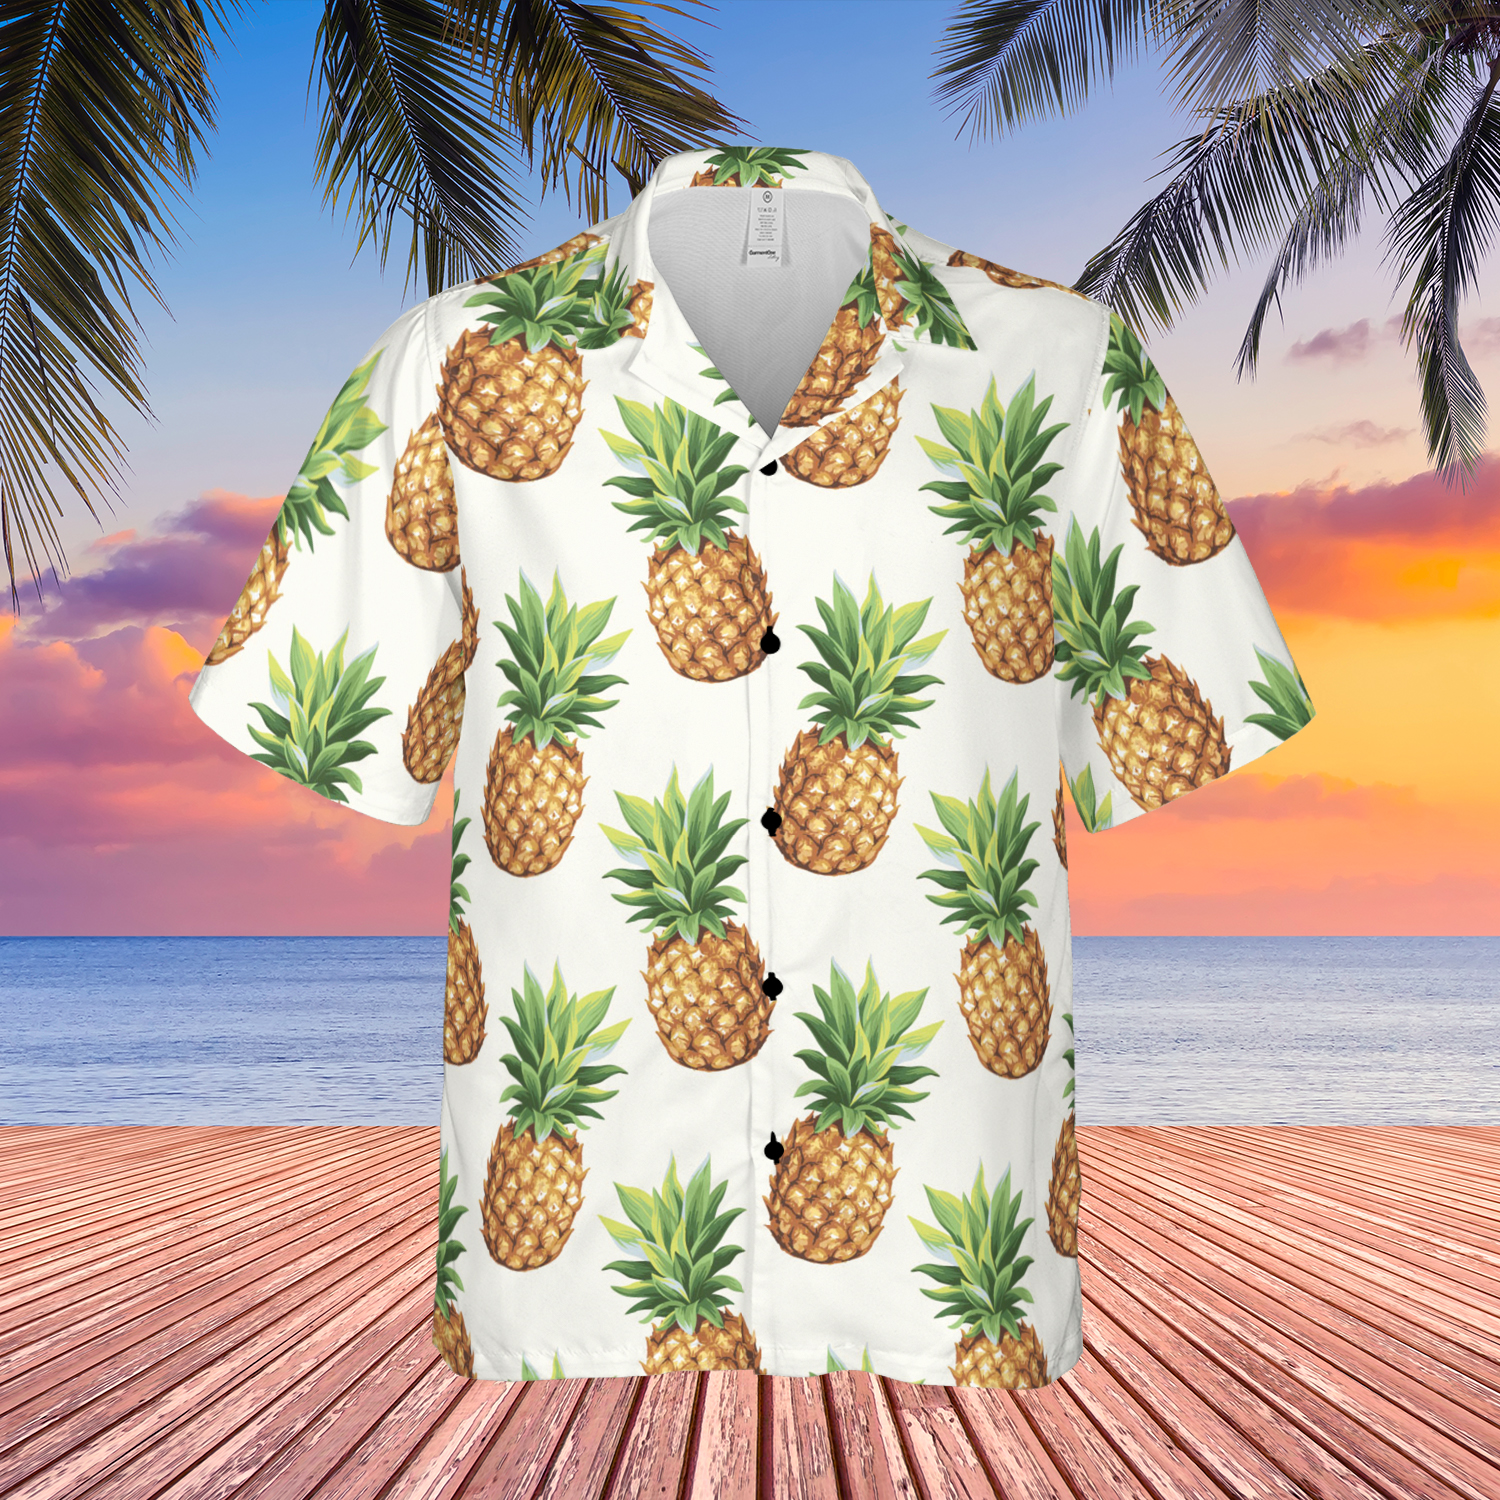 Endastore Pineapple Hawaiian Shirt